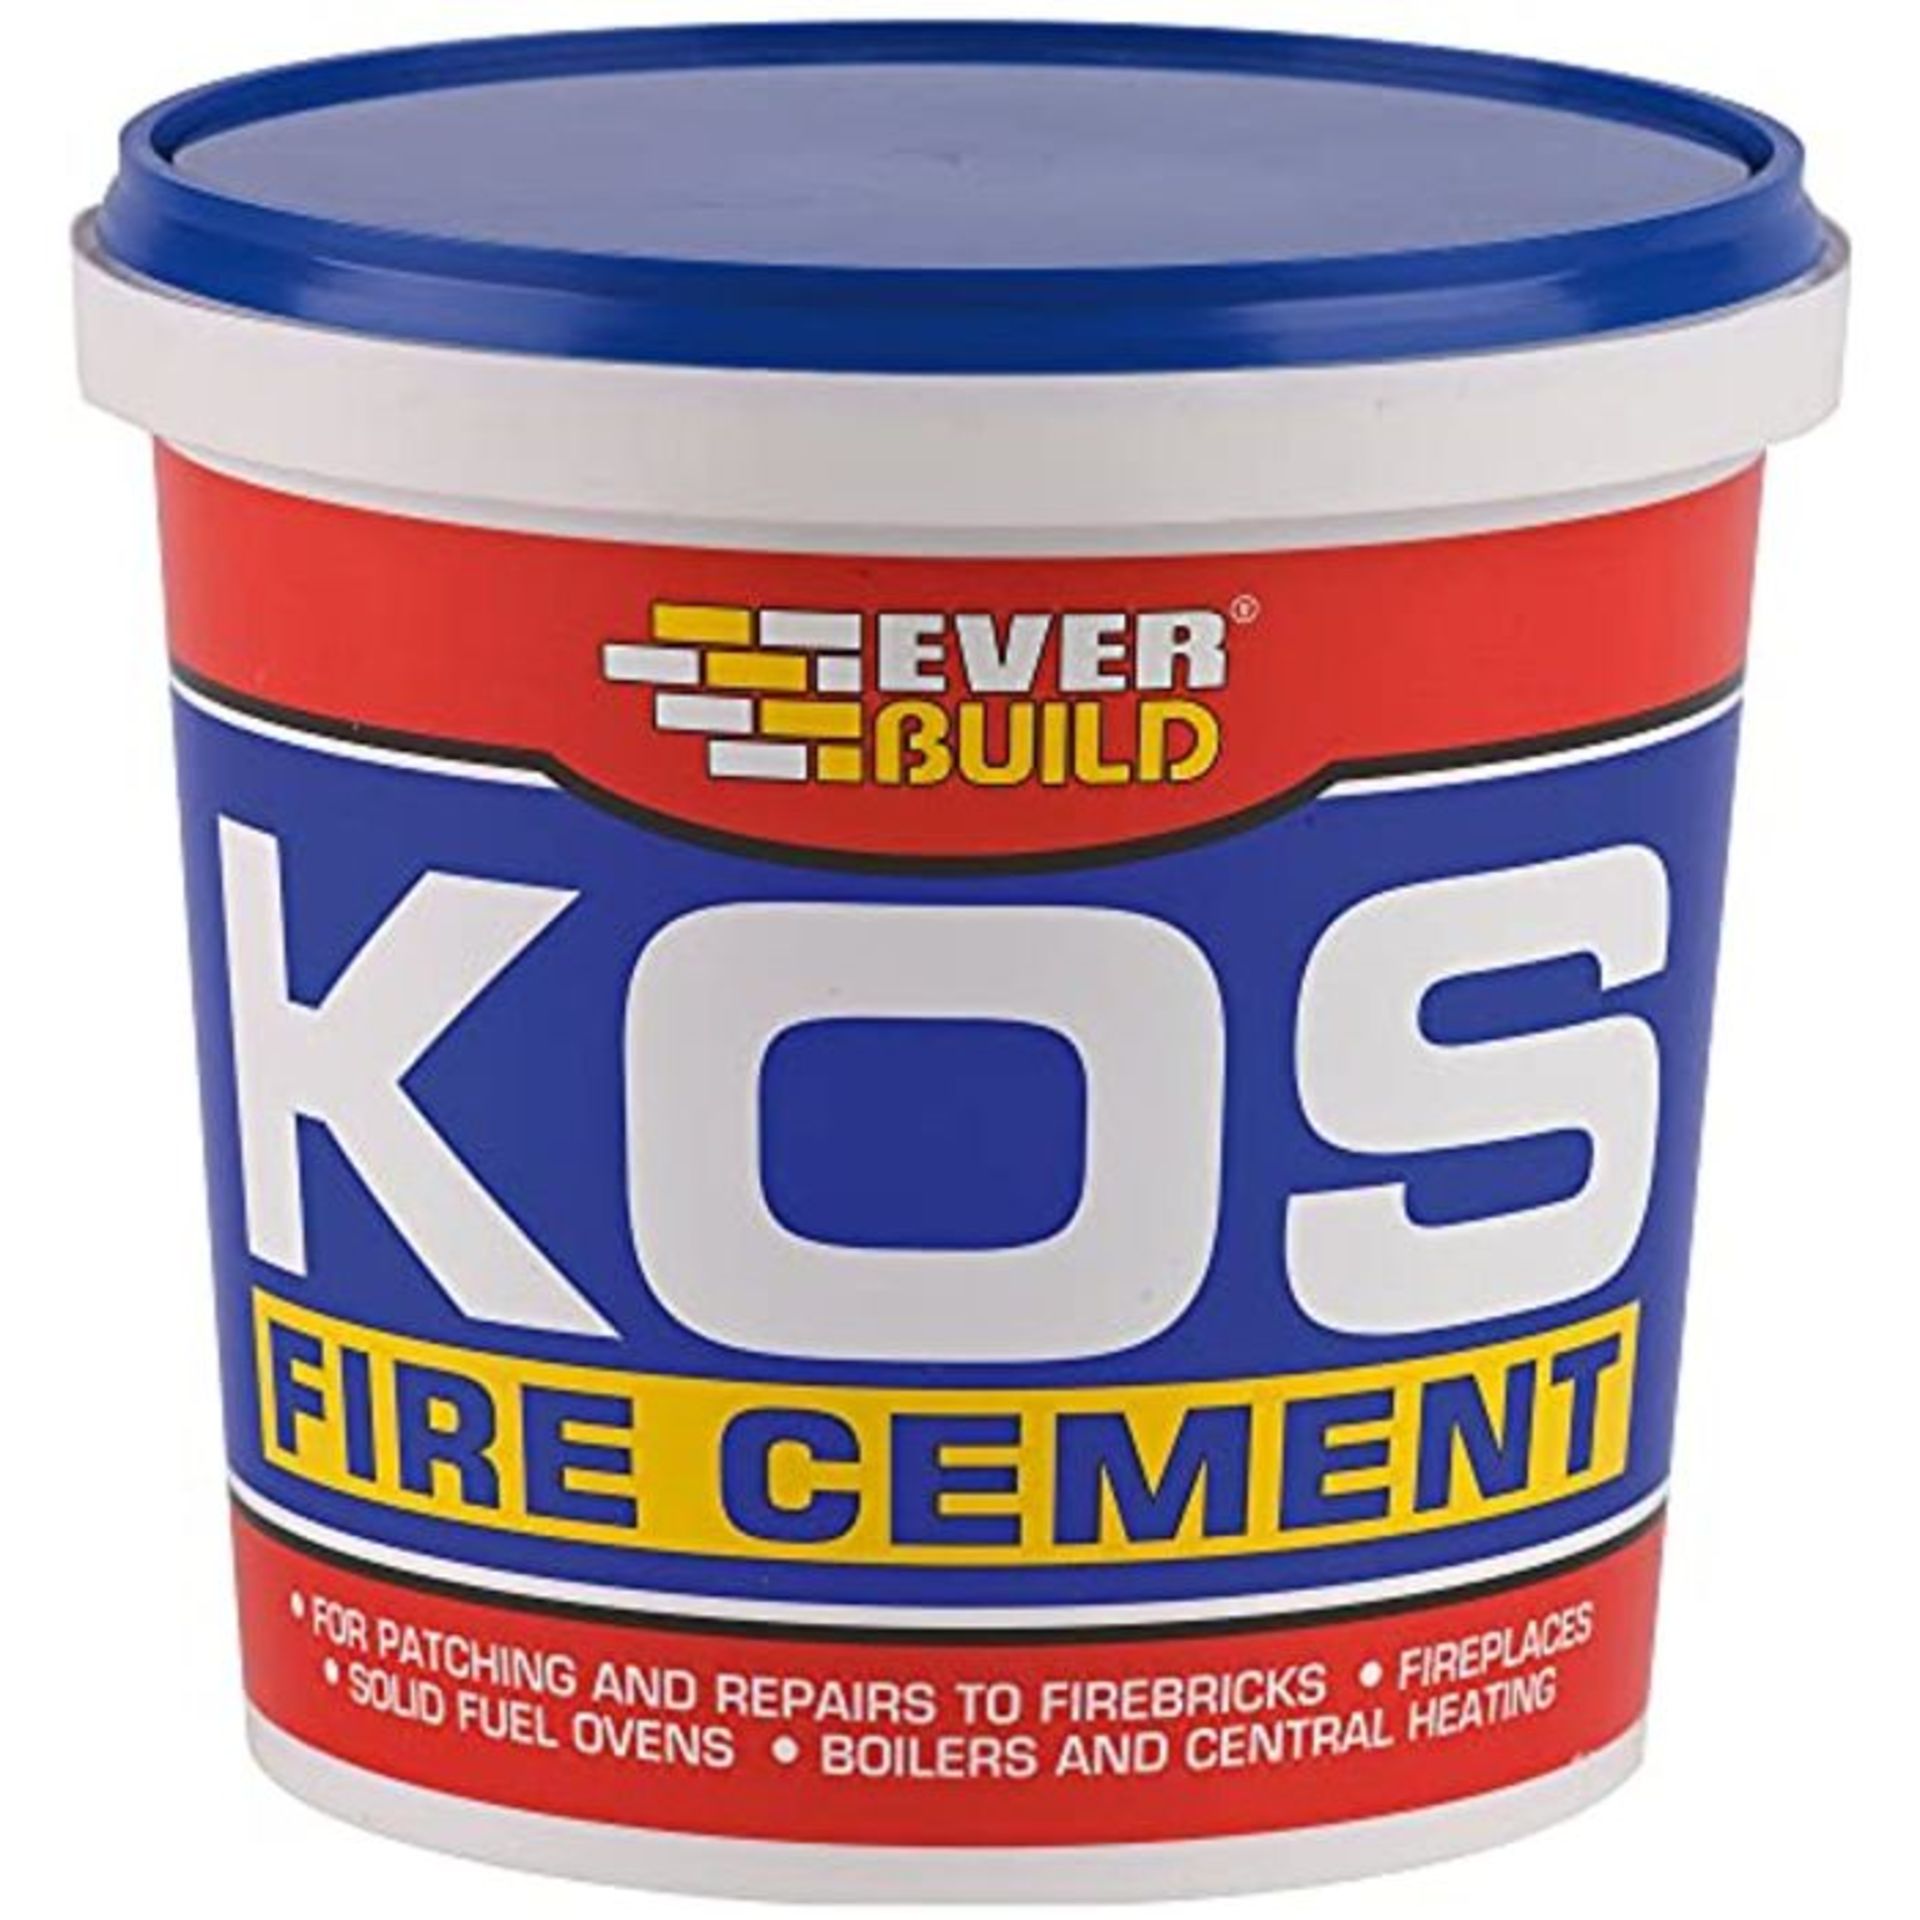 Everbuild KOS Fire Cement, Black, 1 kg - Image 3 of 4